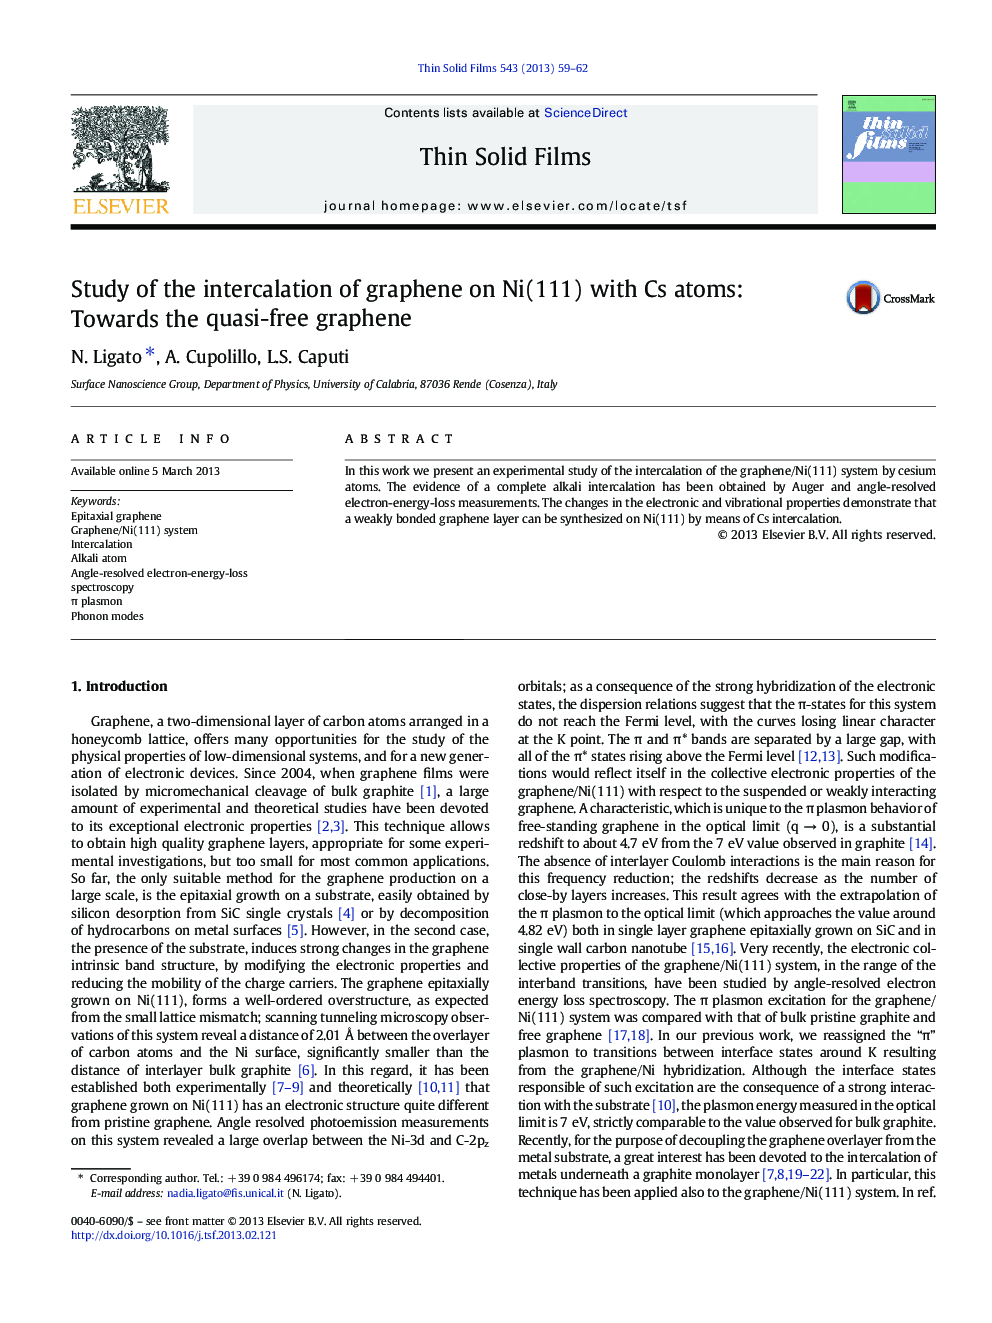 Study of the intercalation of graphene on Ni(111) with Cs atoms: Towards the quasi-free graphene